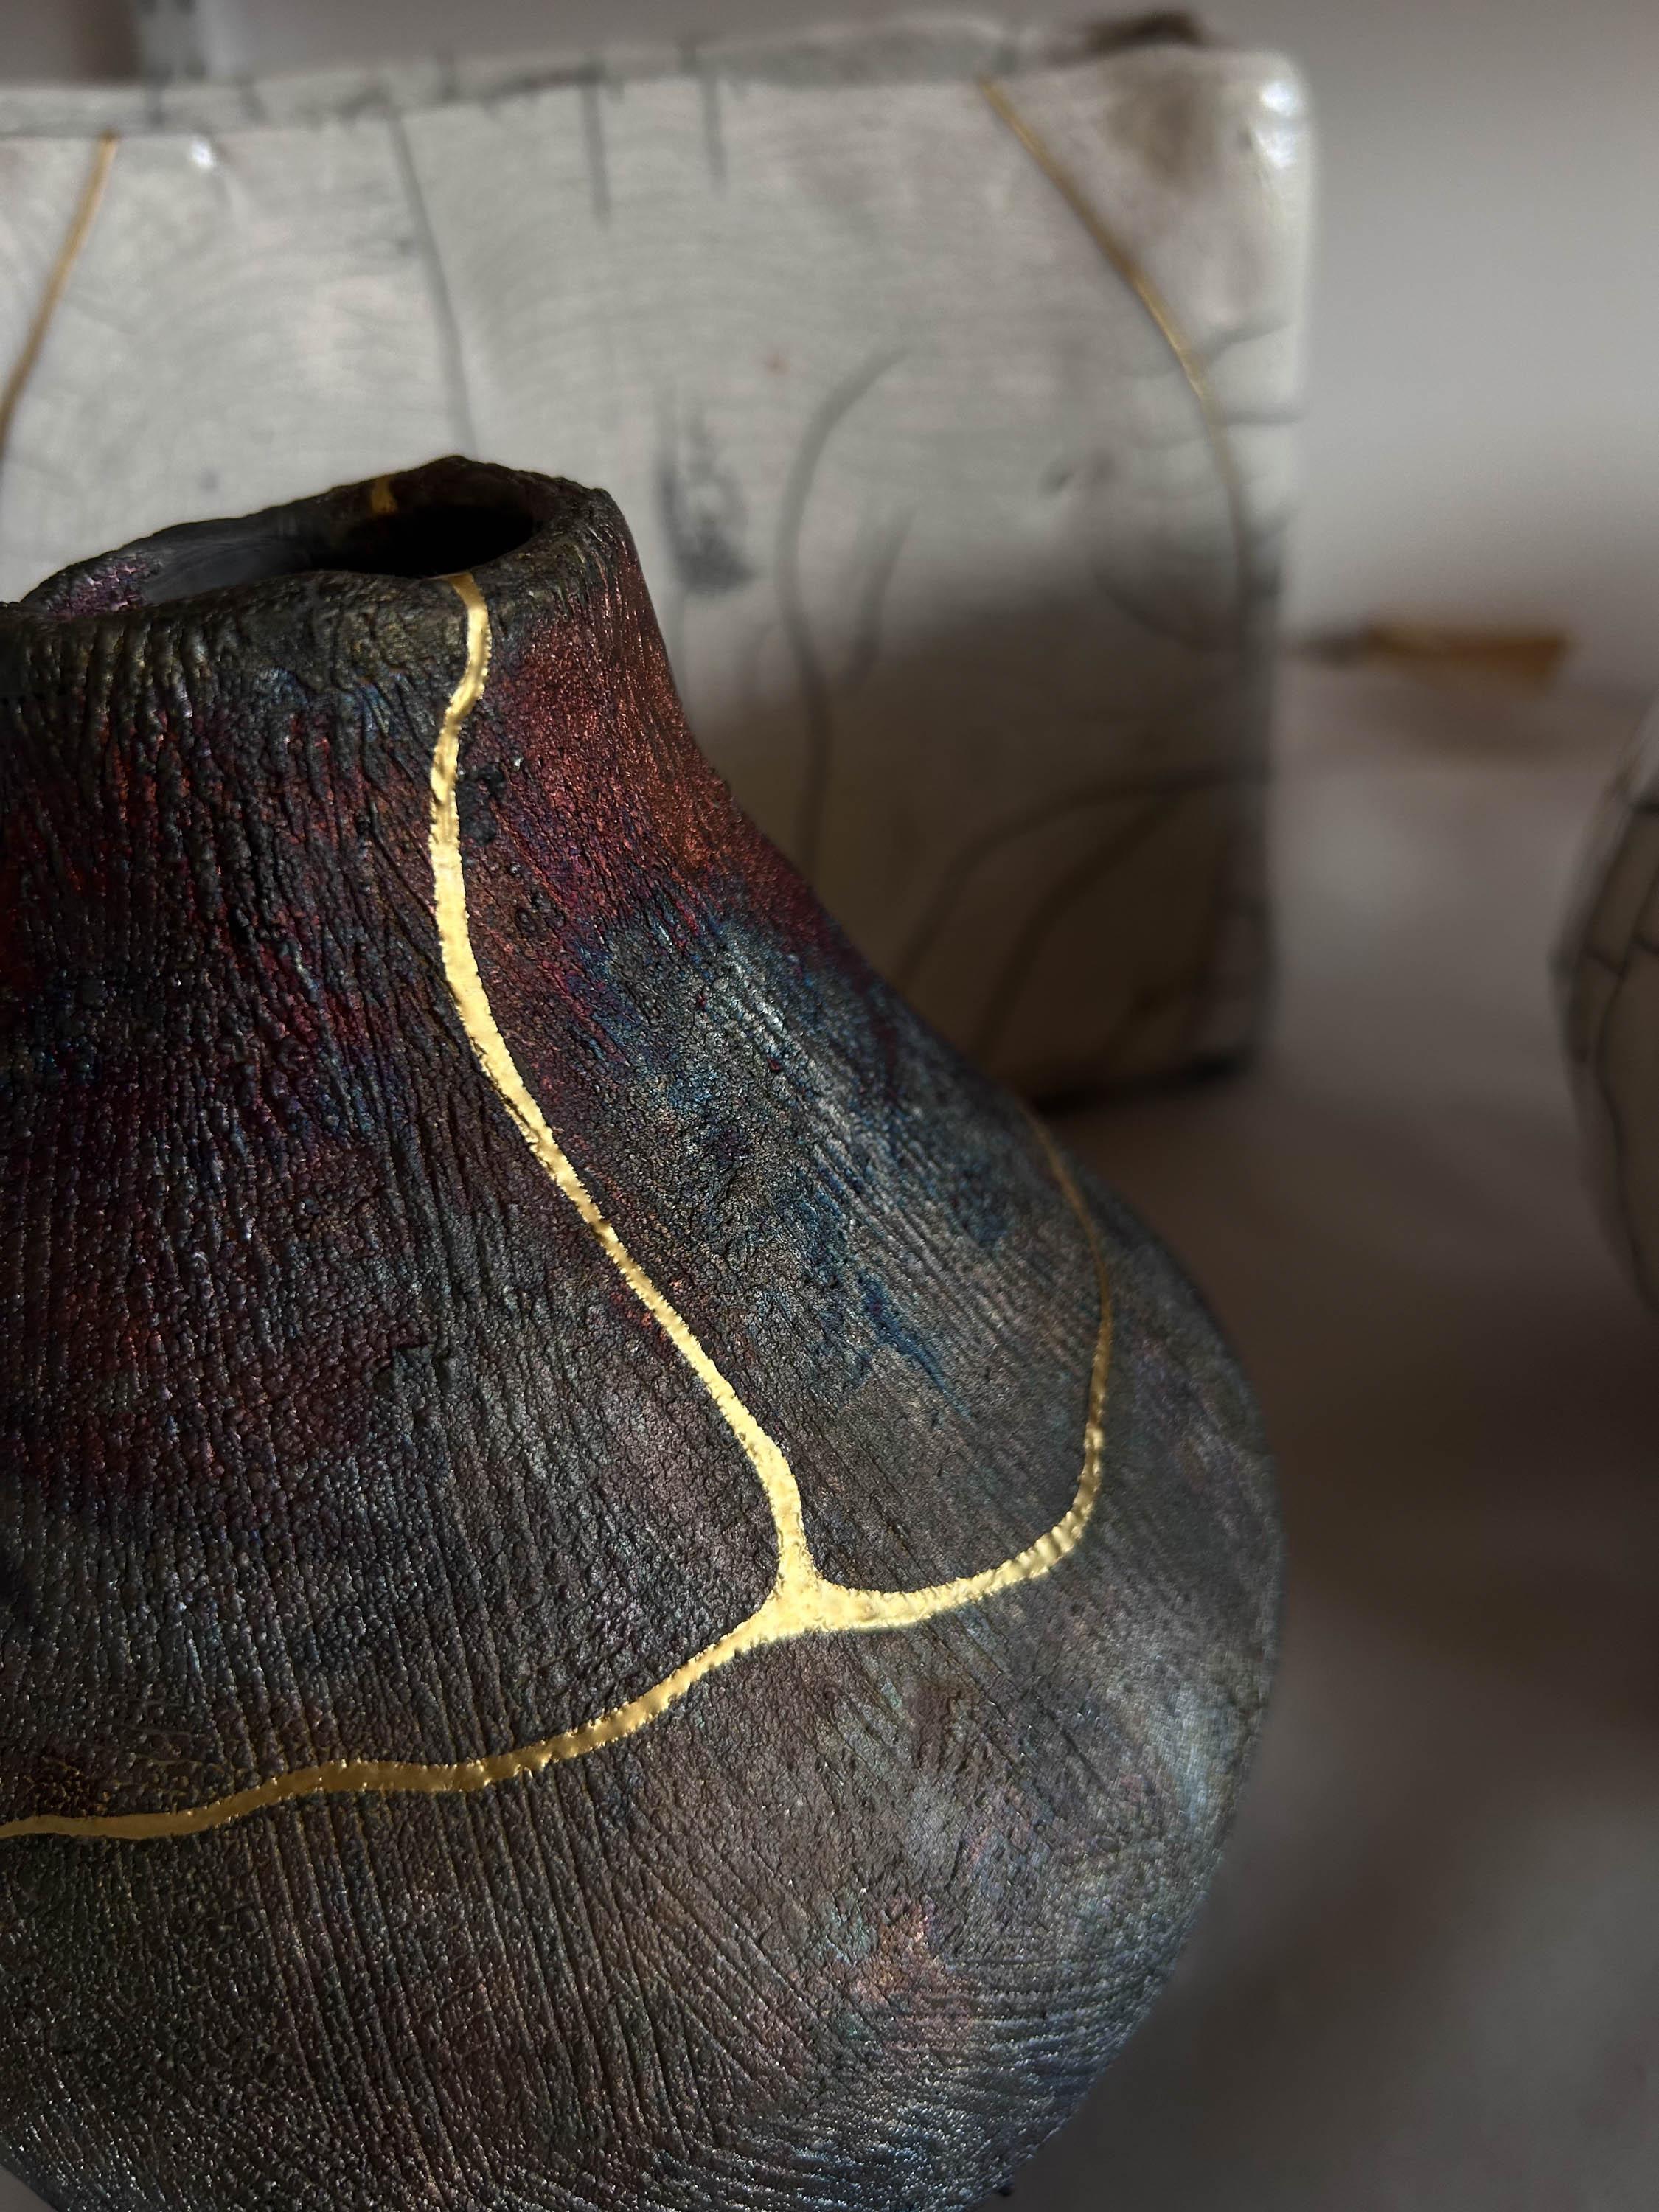 Coil-built Iridescent Vase with 24 Karat Gold Kintsugi Repair 4